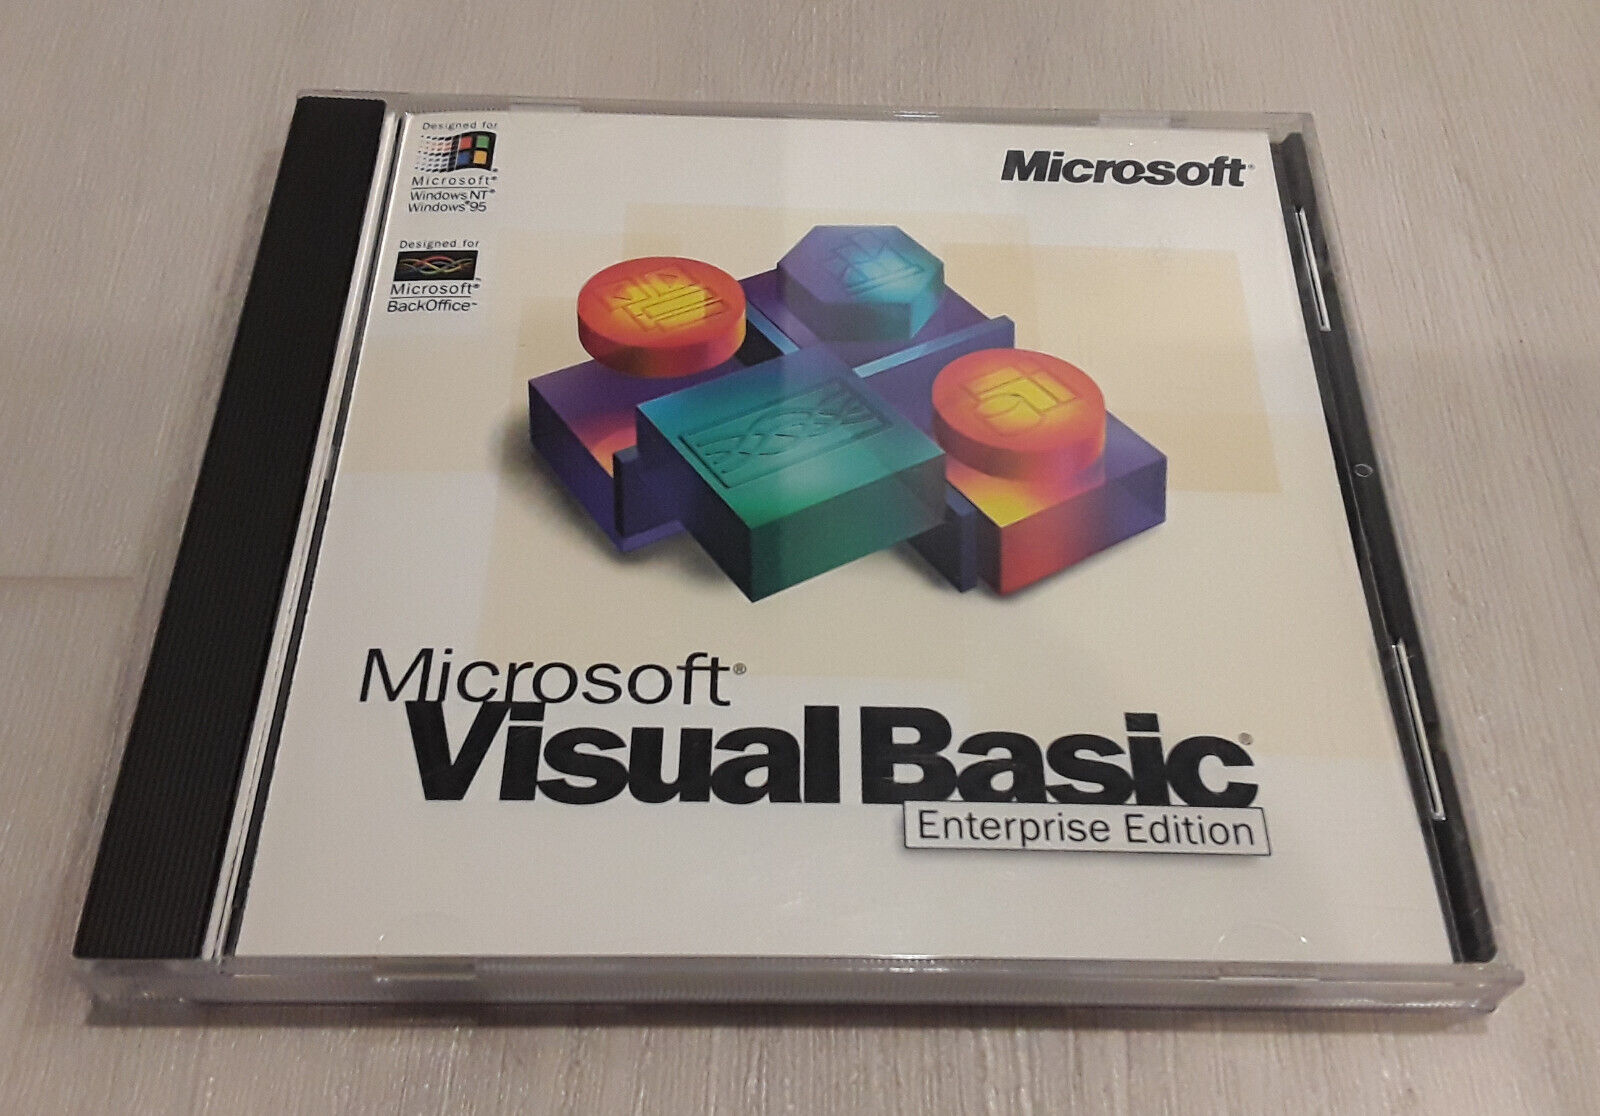 Microsoft Visual Basic 5.0 Enterprise Edition with CD Key (Windows NT / 98)